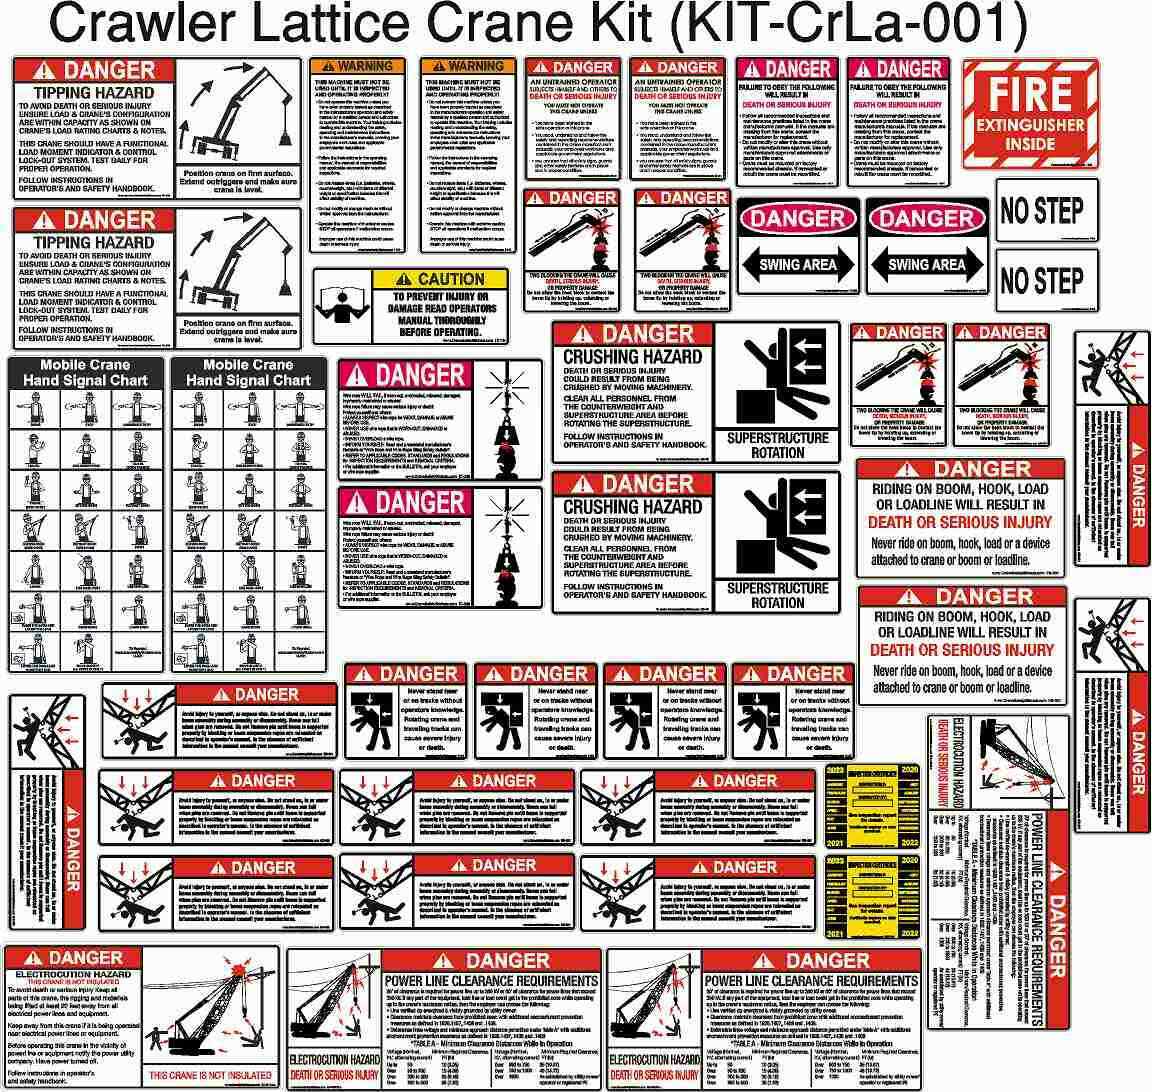 Crawler Lattice Crane Safety Sticker Kit